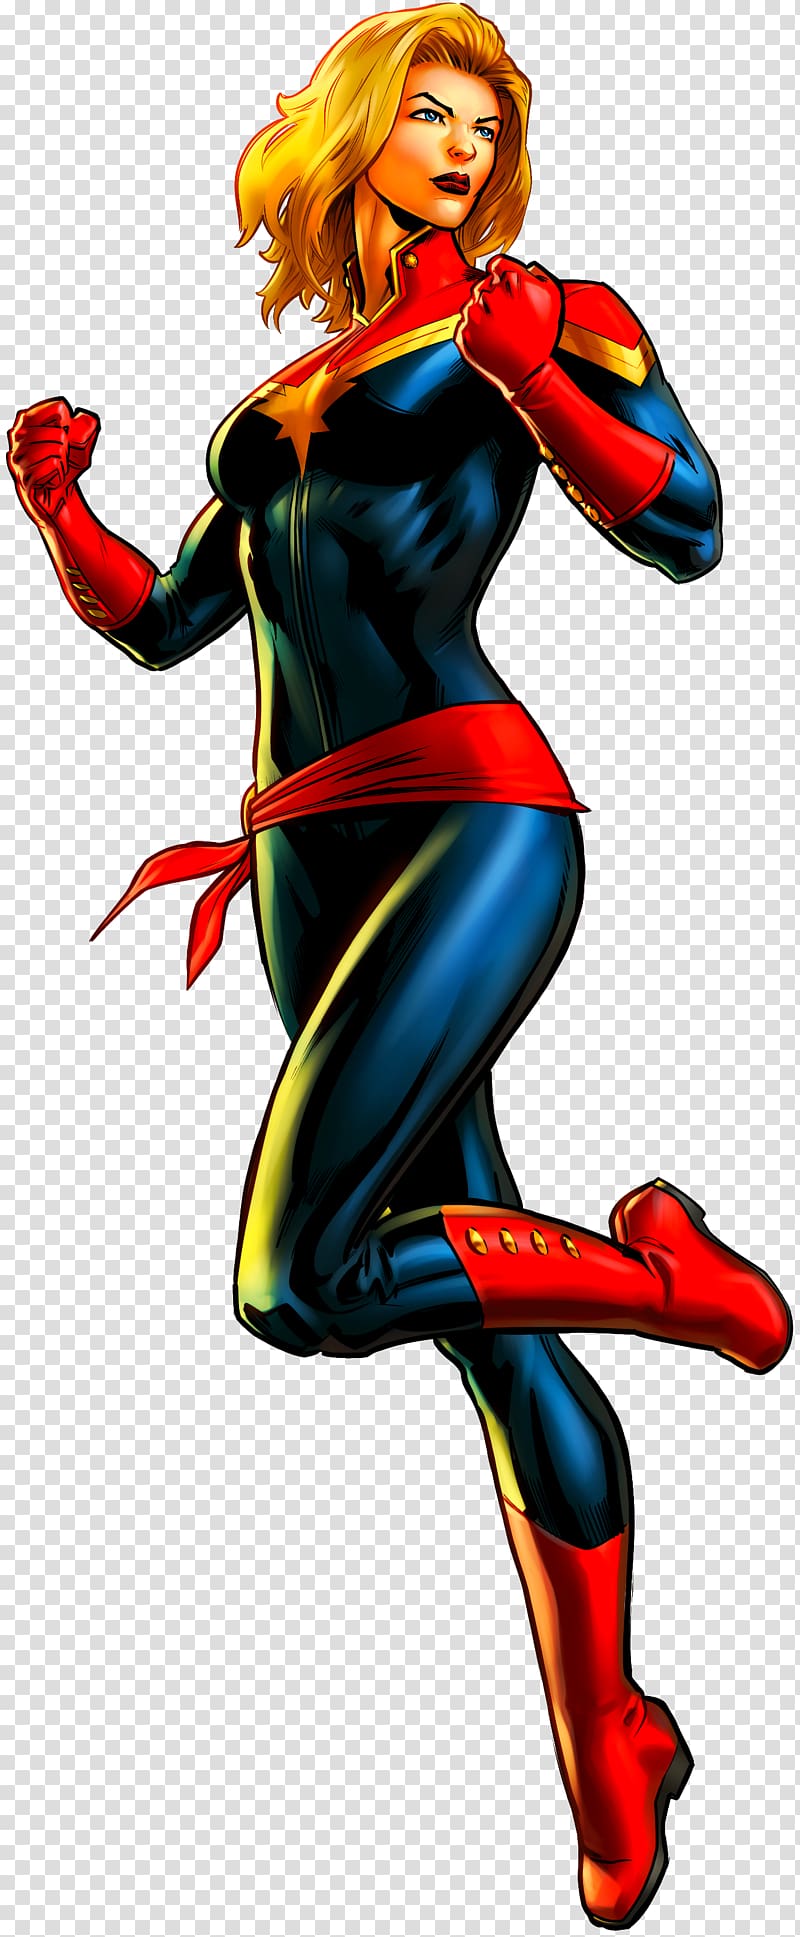 female superhero character , Marvel: Avengers Alliance Black Widow Captain America Carol Danvers The Avengers, captain marvel transparent background PNG clipart